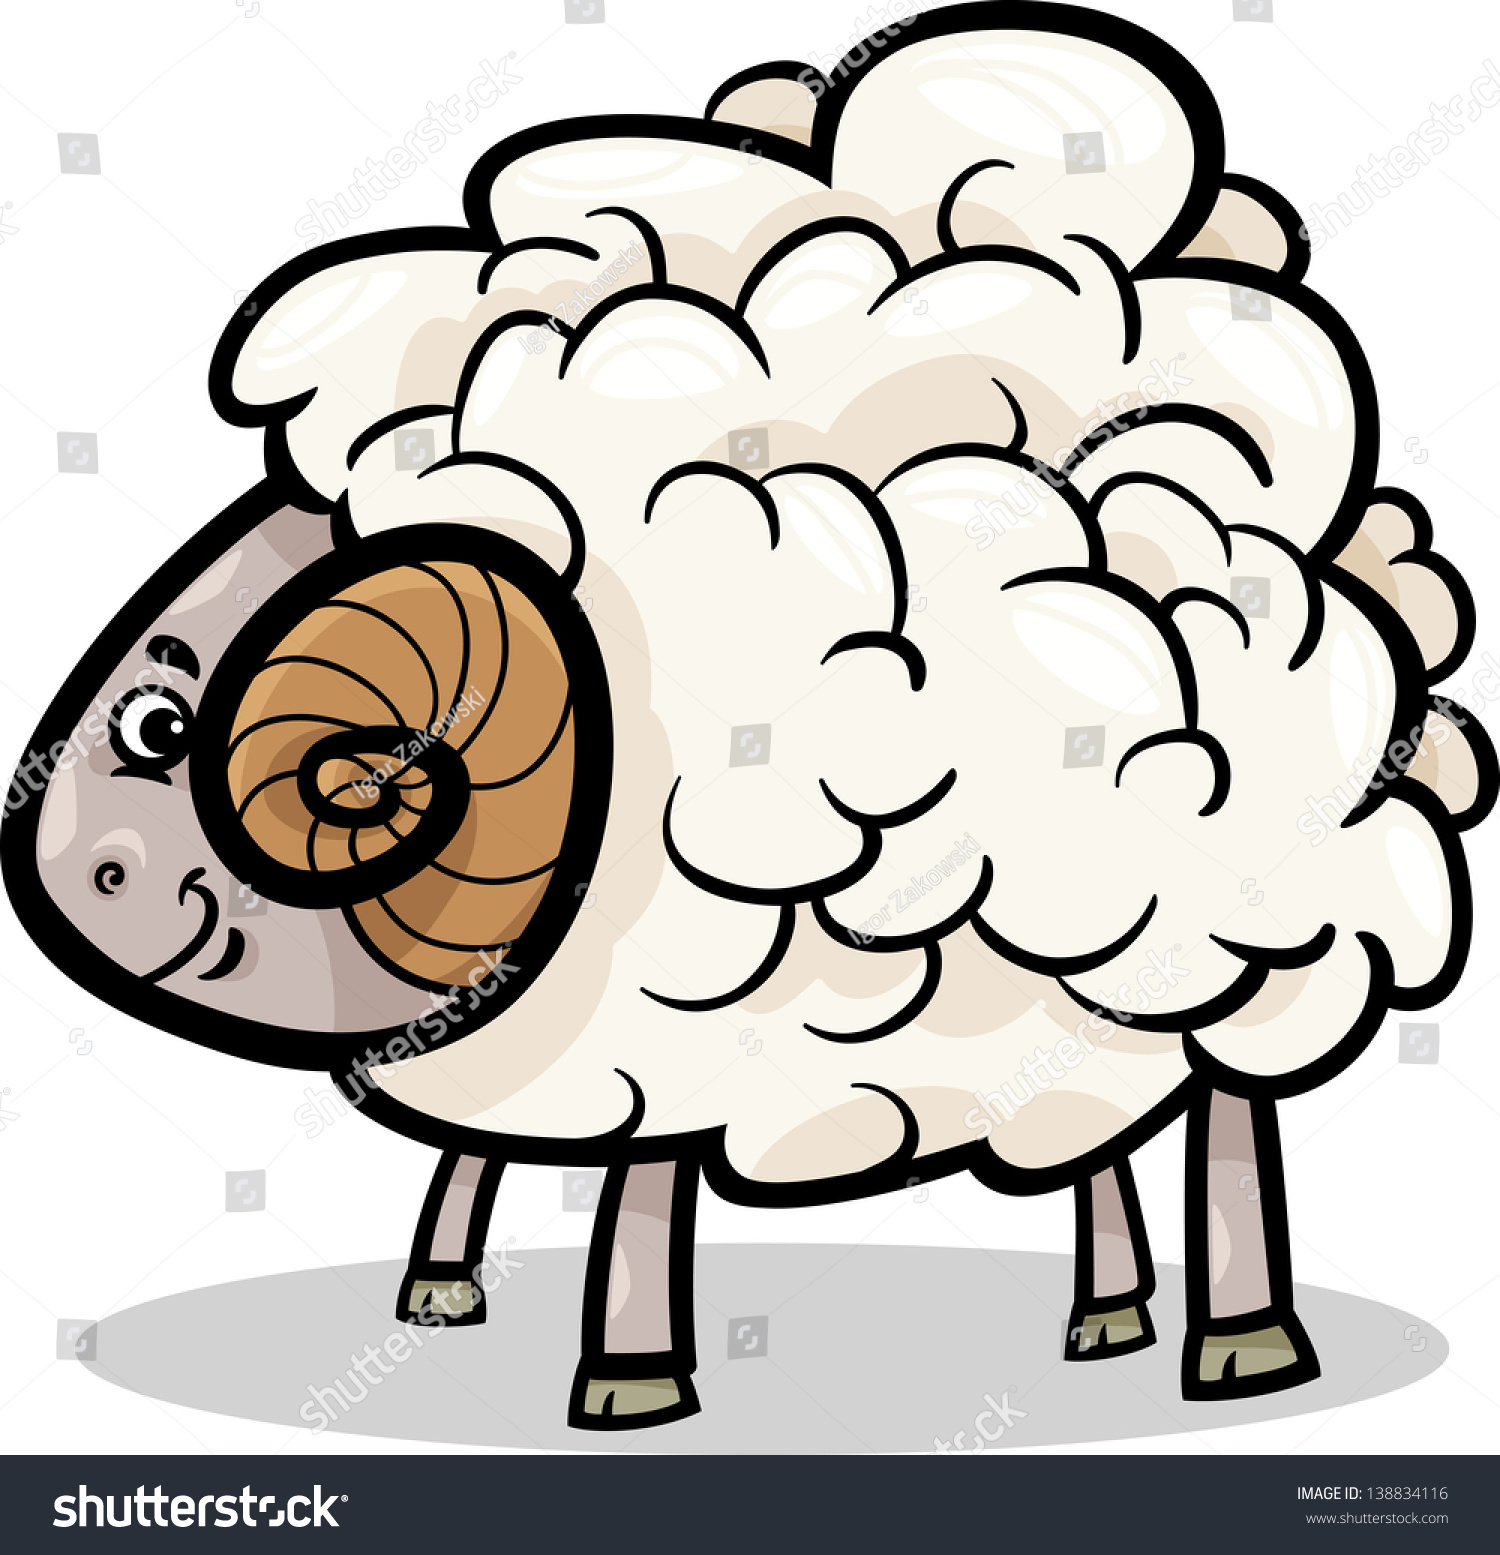 Cartoon Vector Illustration Of Funny Ram Farm Animal - 138834116